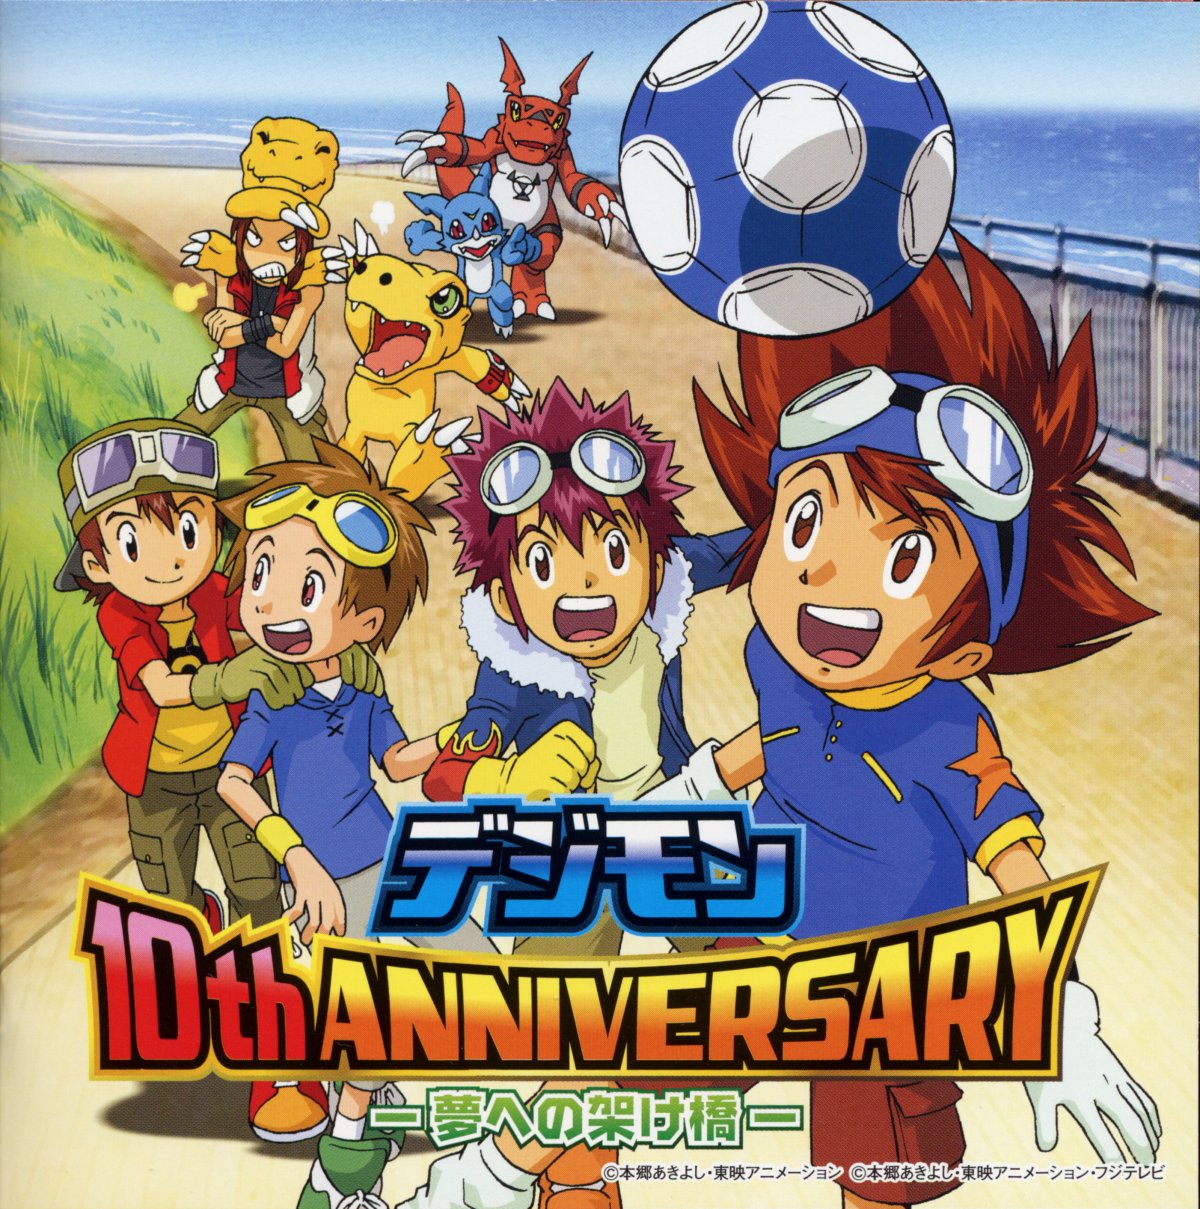 Download this Digimon Anniversary The Bridge Dreams Wiki picture